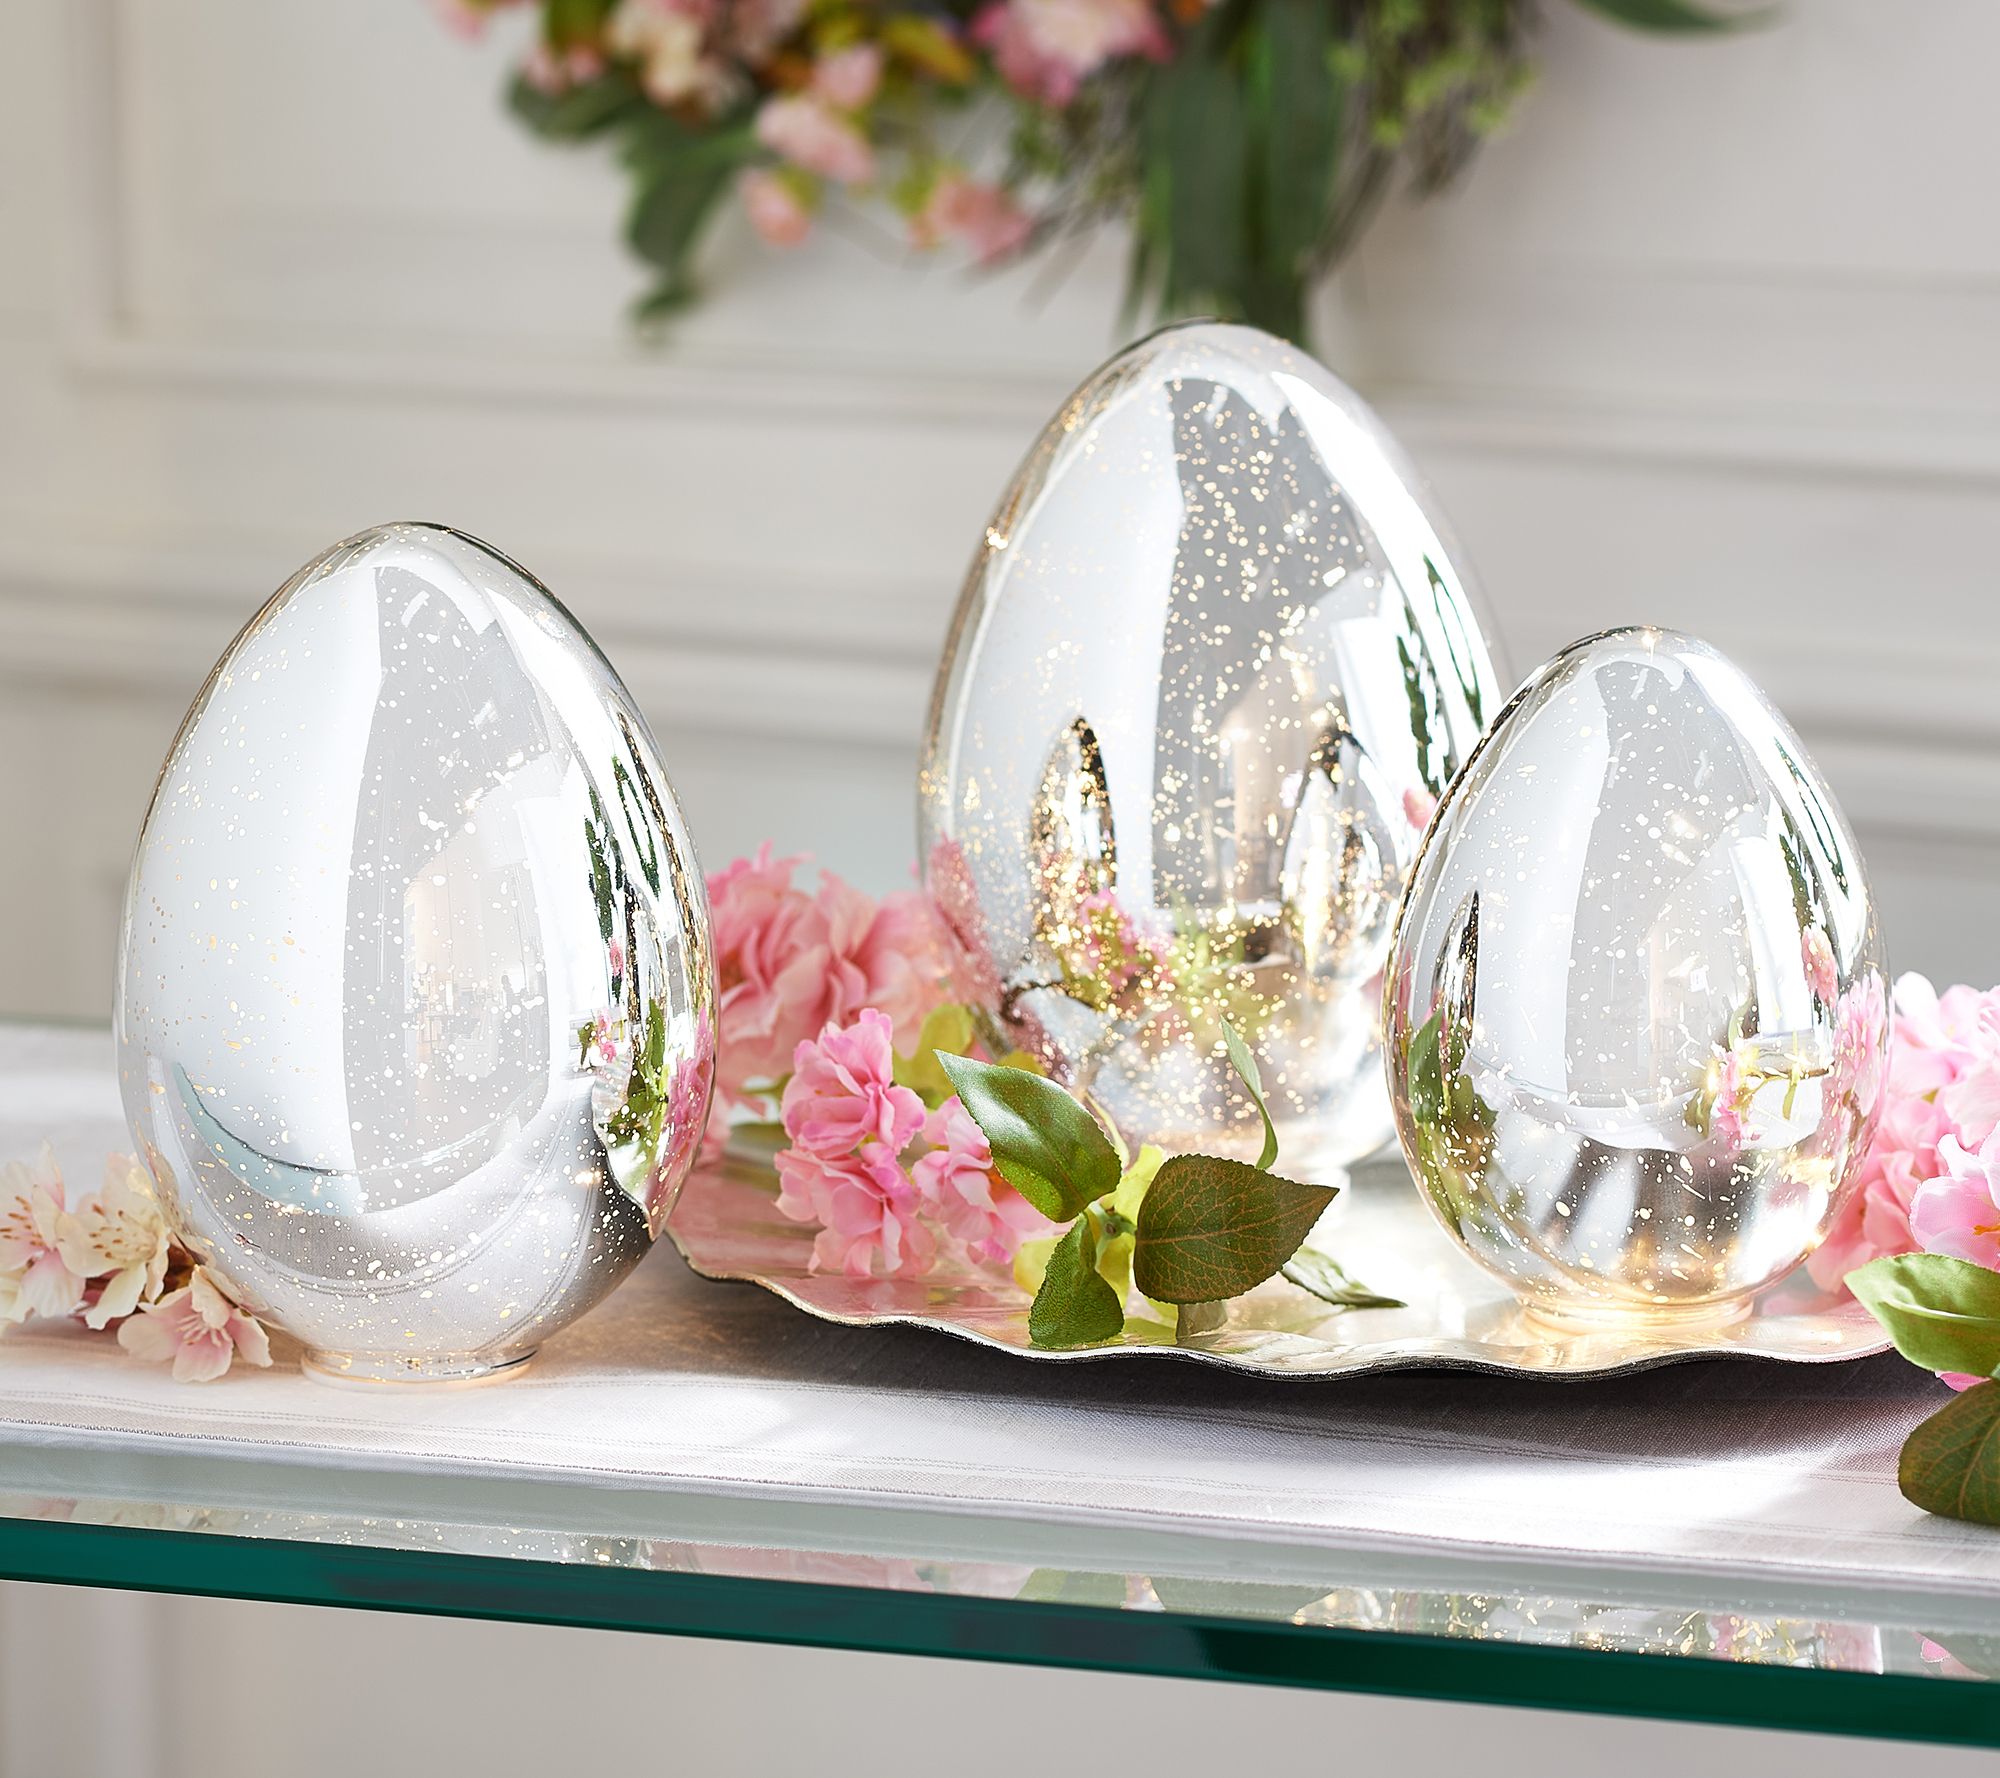 Set of 3 Illuminated Mercury Glass Eggs by Valerie 